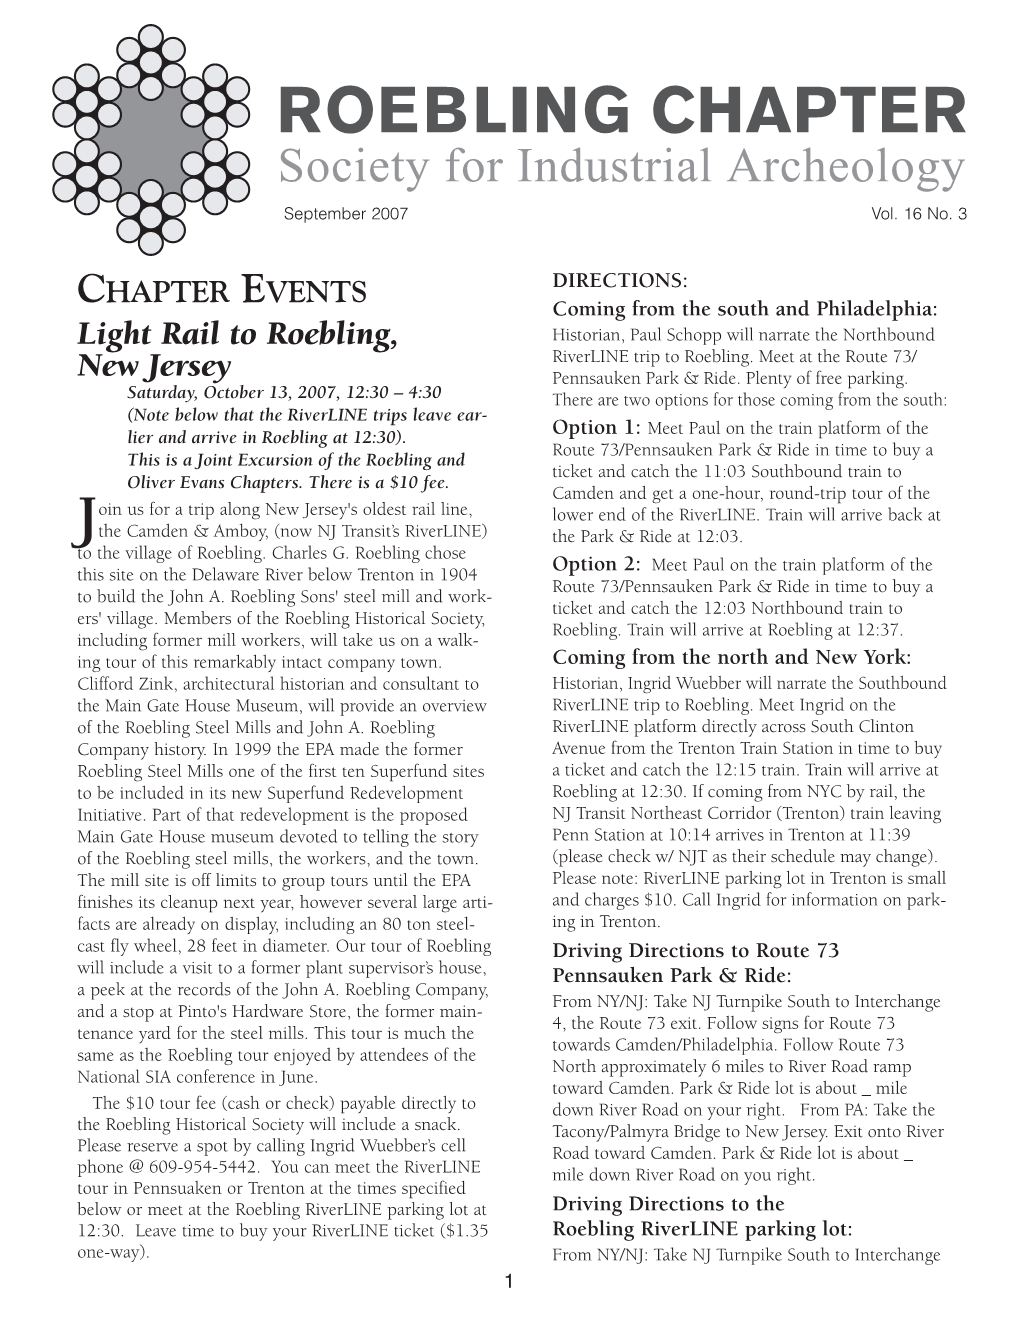 Roebling Chap. Newsletter, Vol 16, No. 3 Sept. 2007